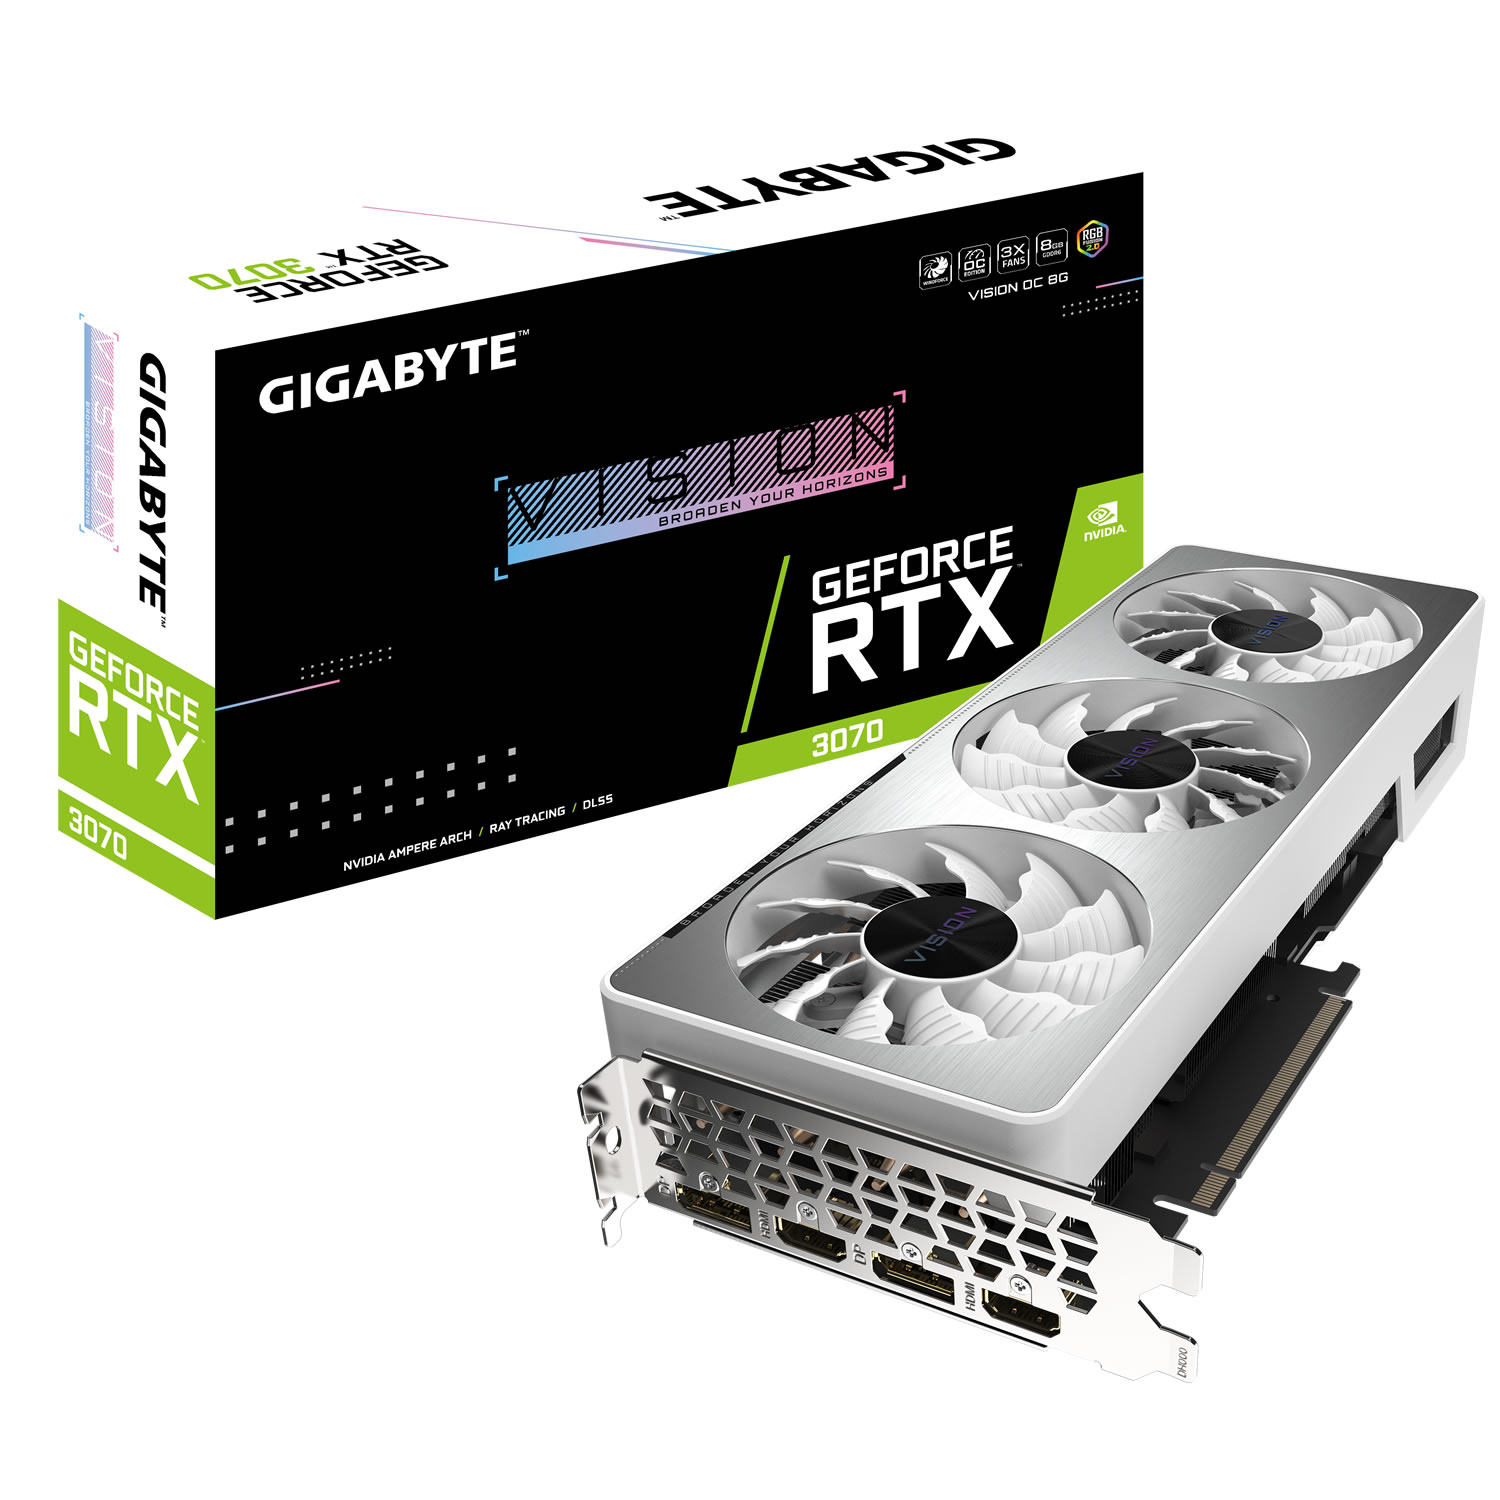 Gigabyte GeForce RTX 3070 Vision OC LHR 8GB GDDR6 PCI-Express Graphics Card